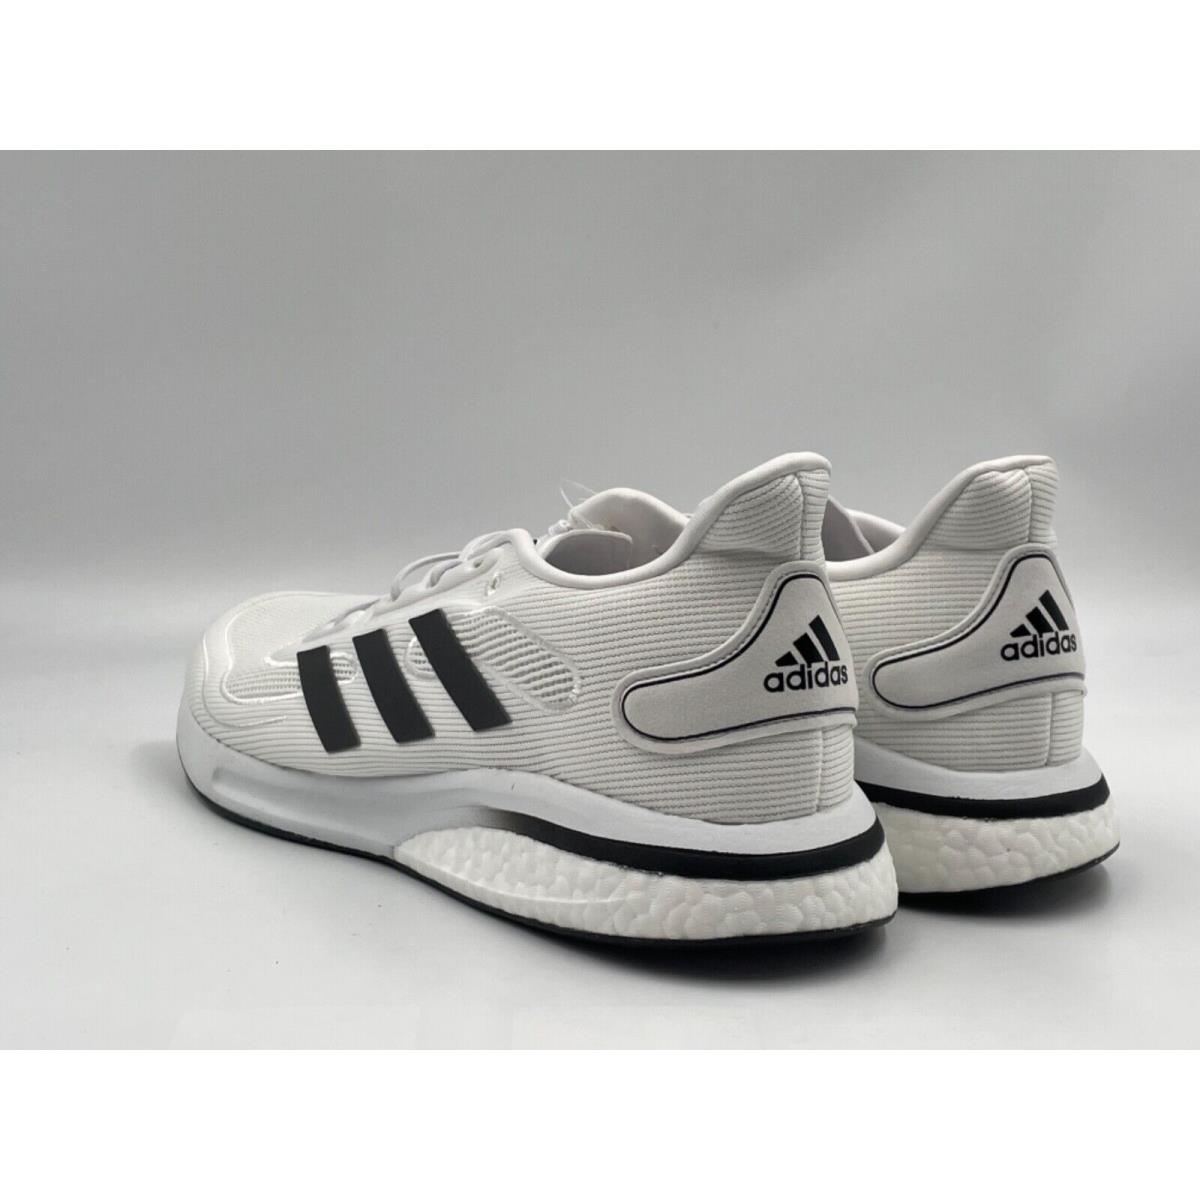 Adidas shoes Supernova - White Black Gray 5